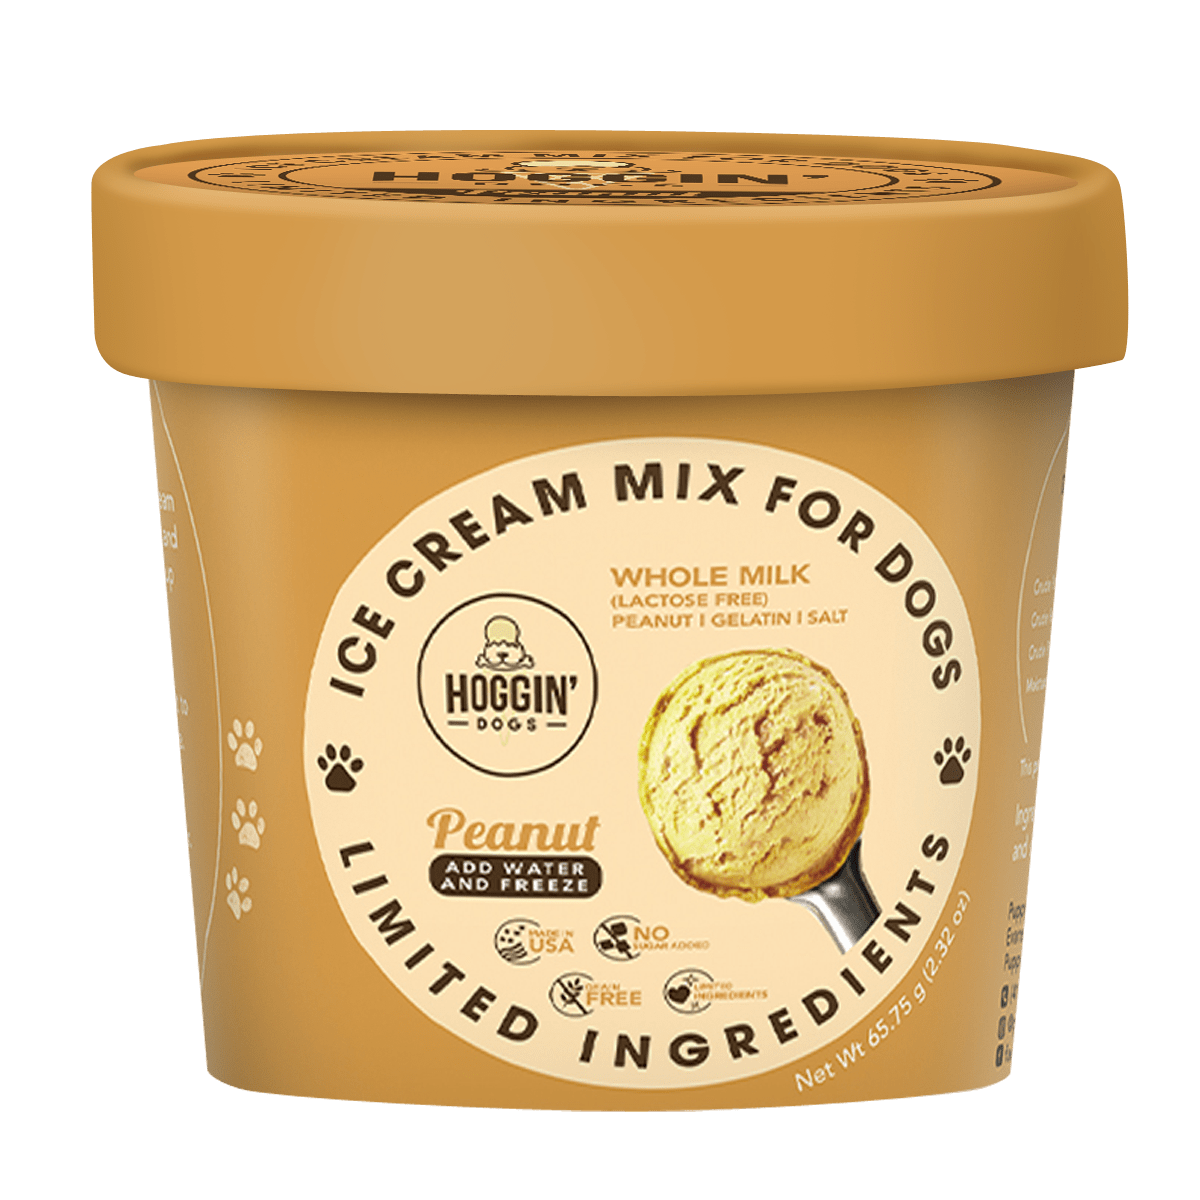 Hoggin' Dogs Peanut Ice Cream Mix for Dogs